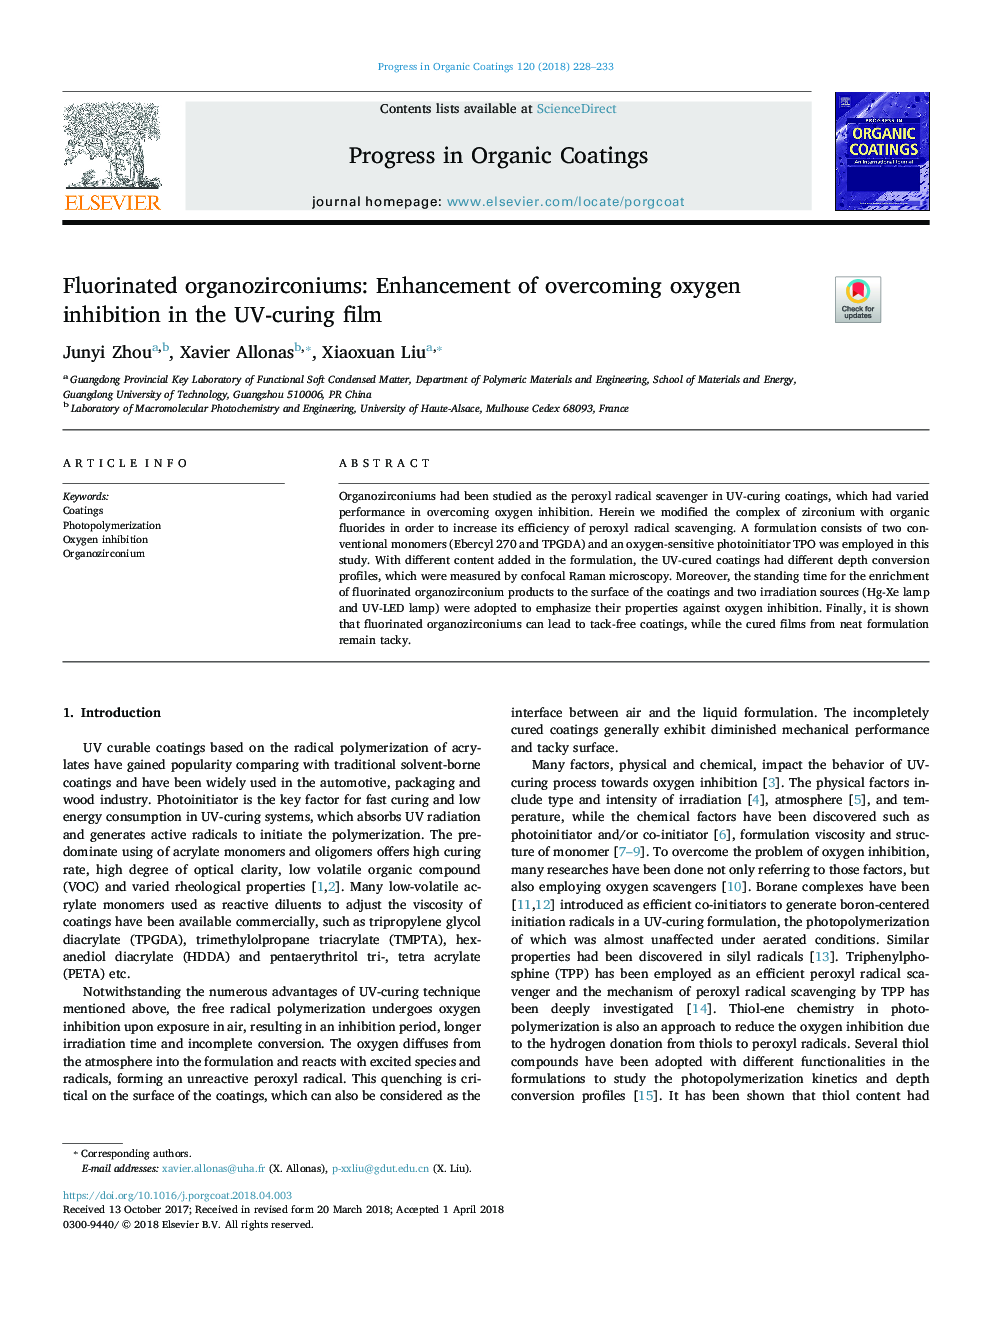 Fluorinated organozirconiums: Enhancement of overcoming oxygen inhibition in the UV-curing film